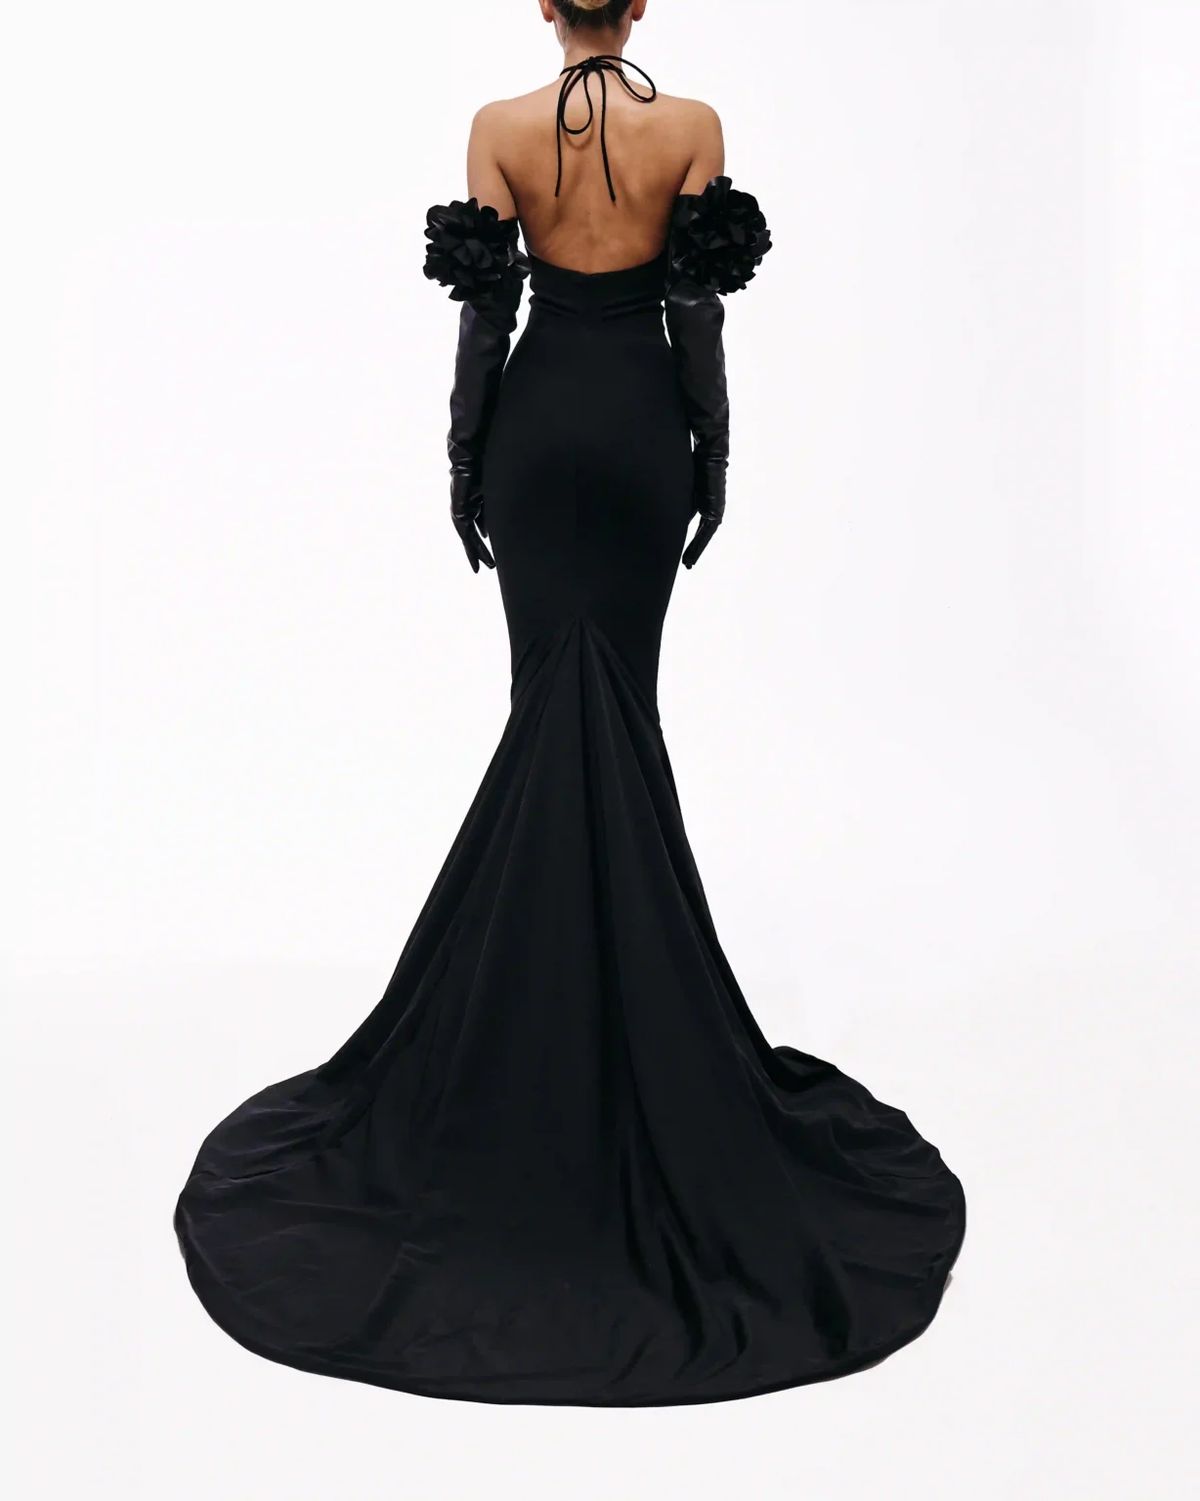 Style euphoria-24-10 Valdrin Sahiti Size S Pageant Black Mermaid Dress on Queenly